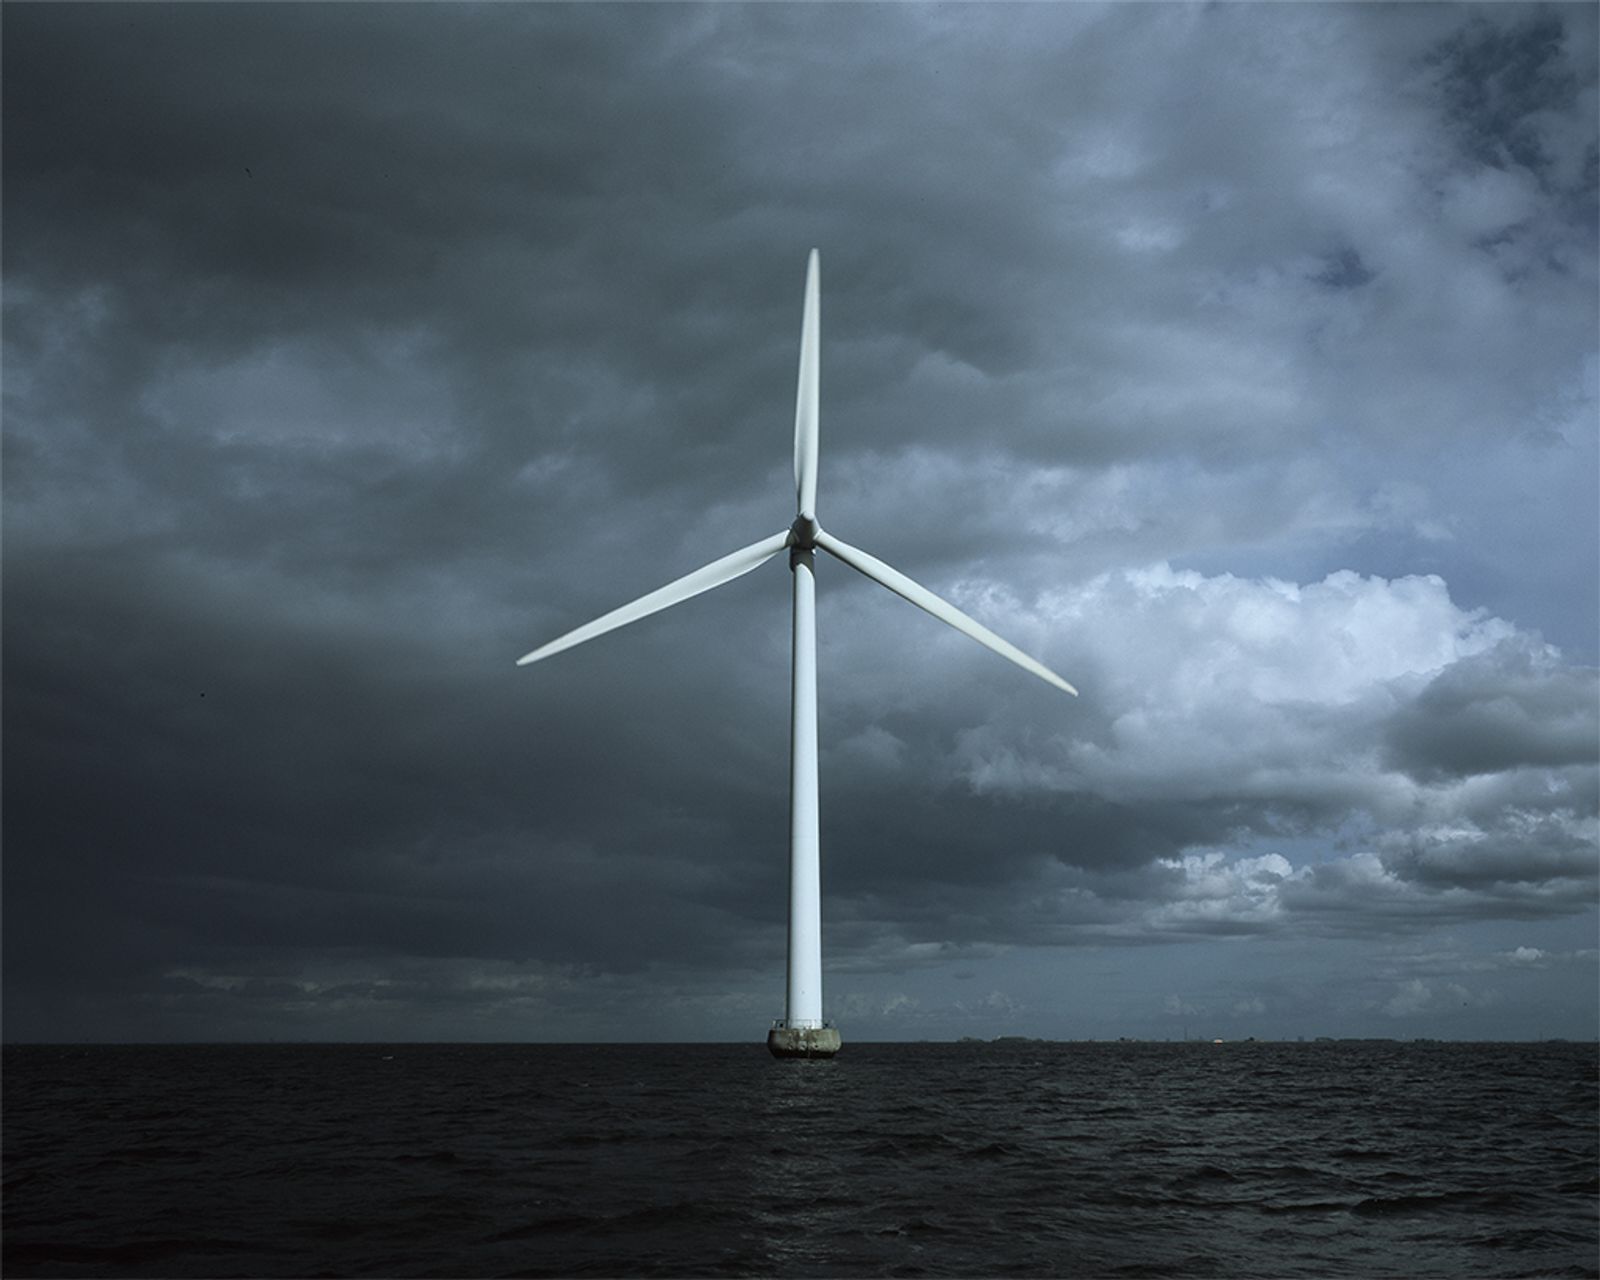 © Bryan Steiff - Middlegrunden Wind Farm, Øresund, Copenhagen, Denmark, 2014